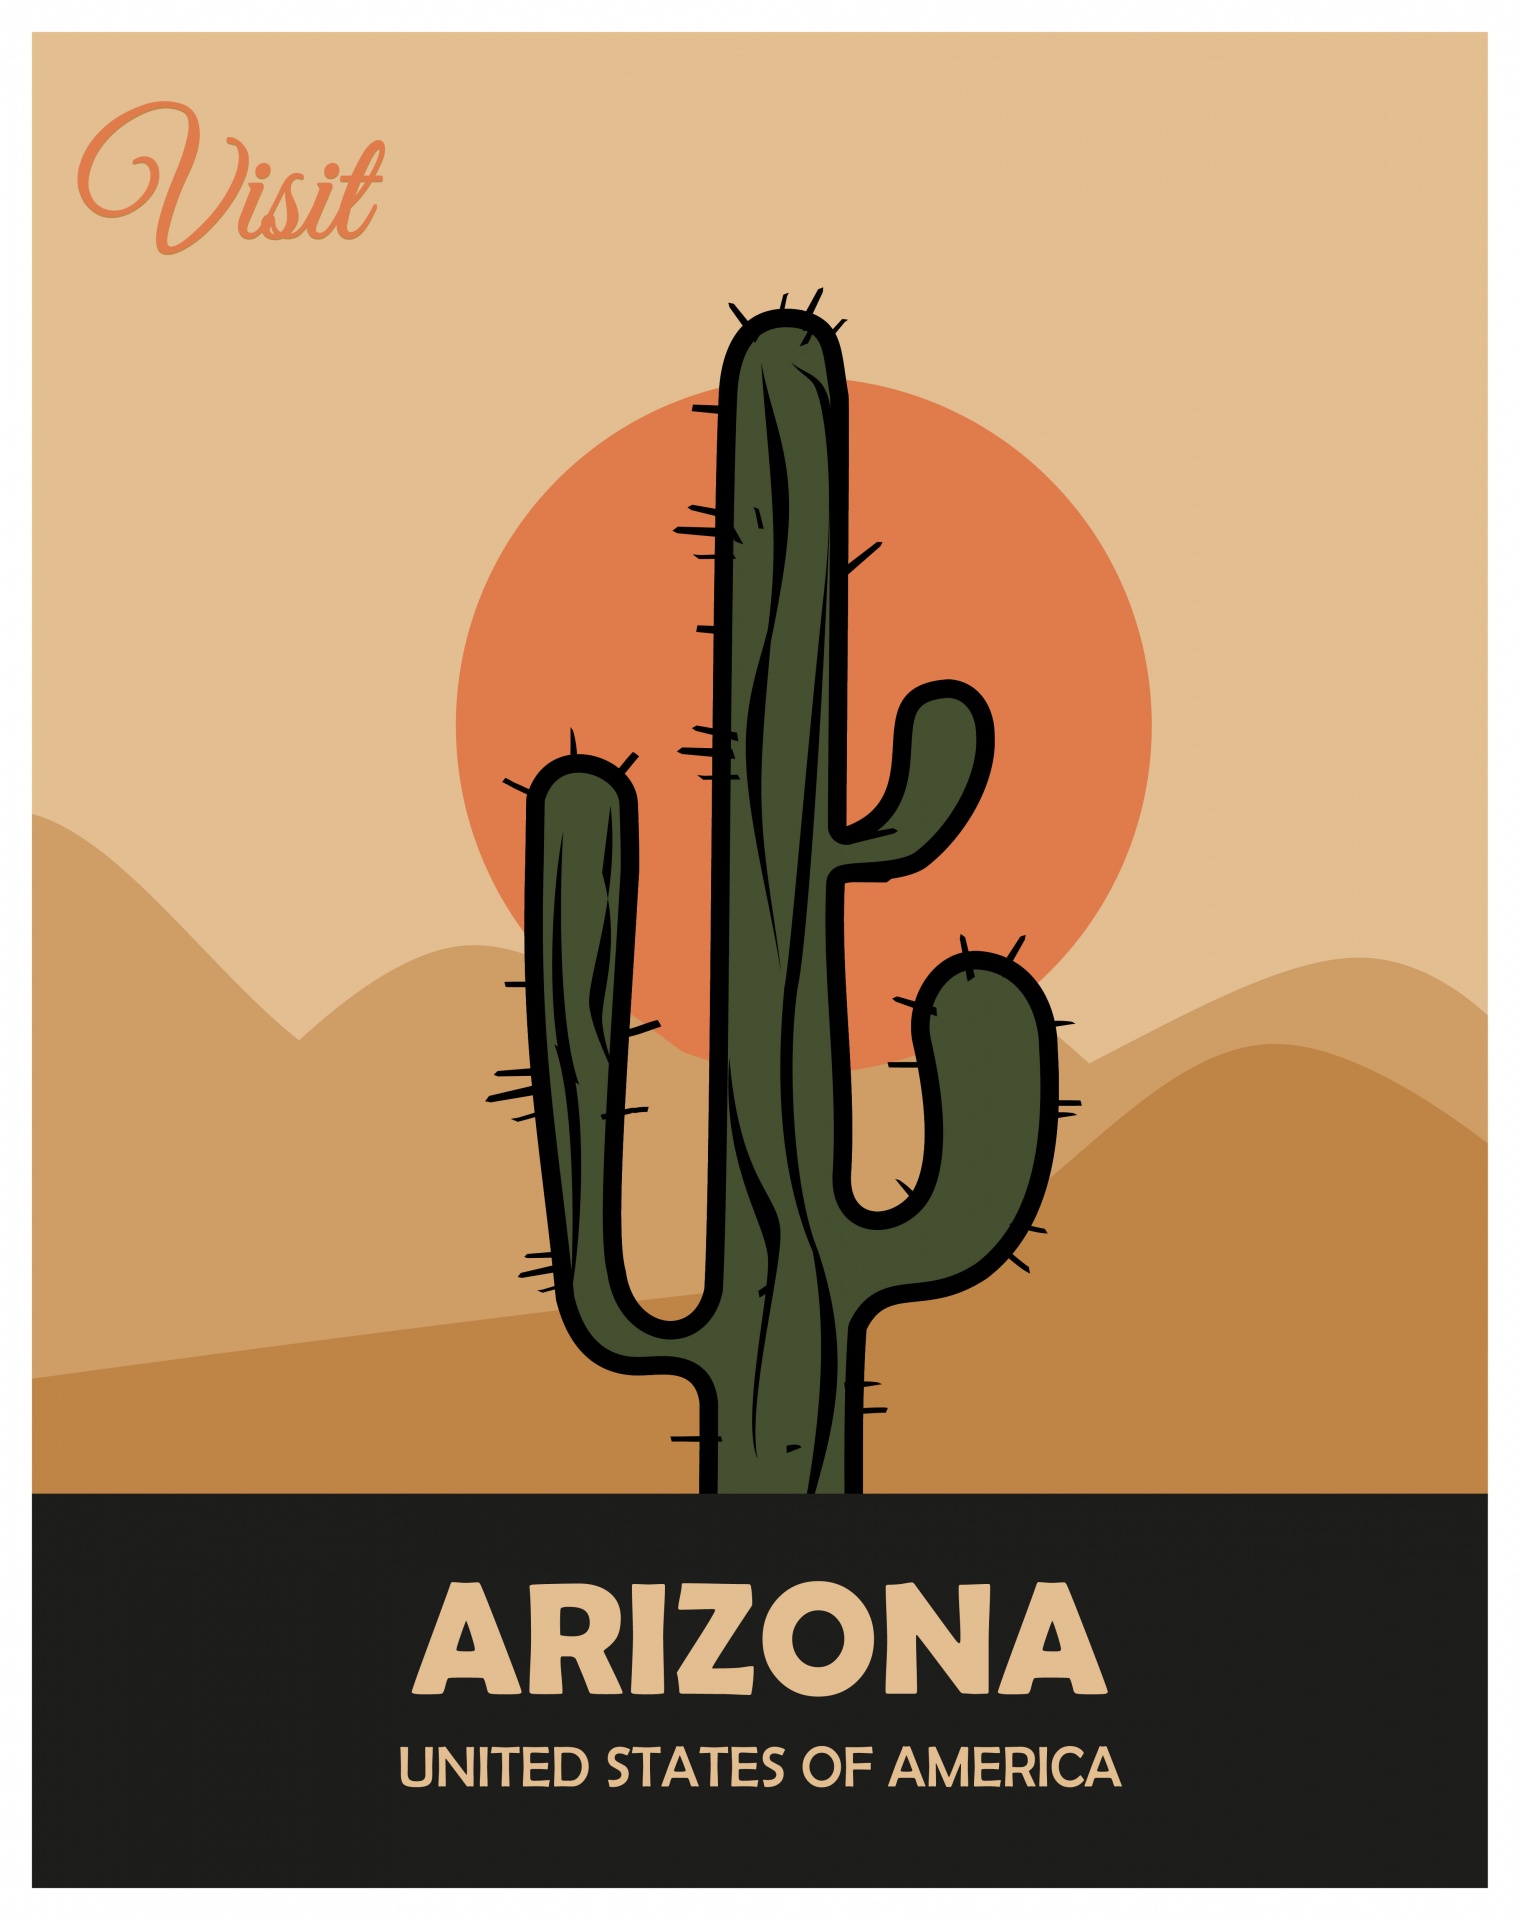 Arizona Sunset Travel Poster